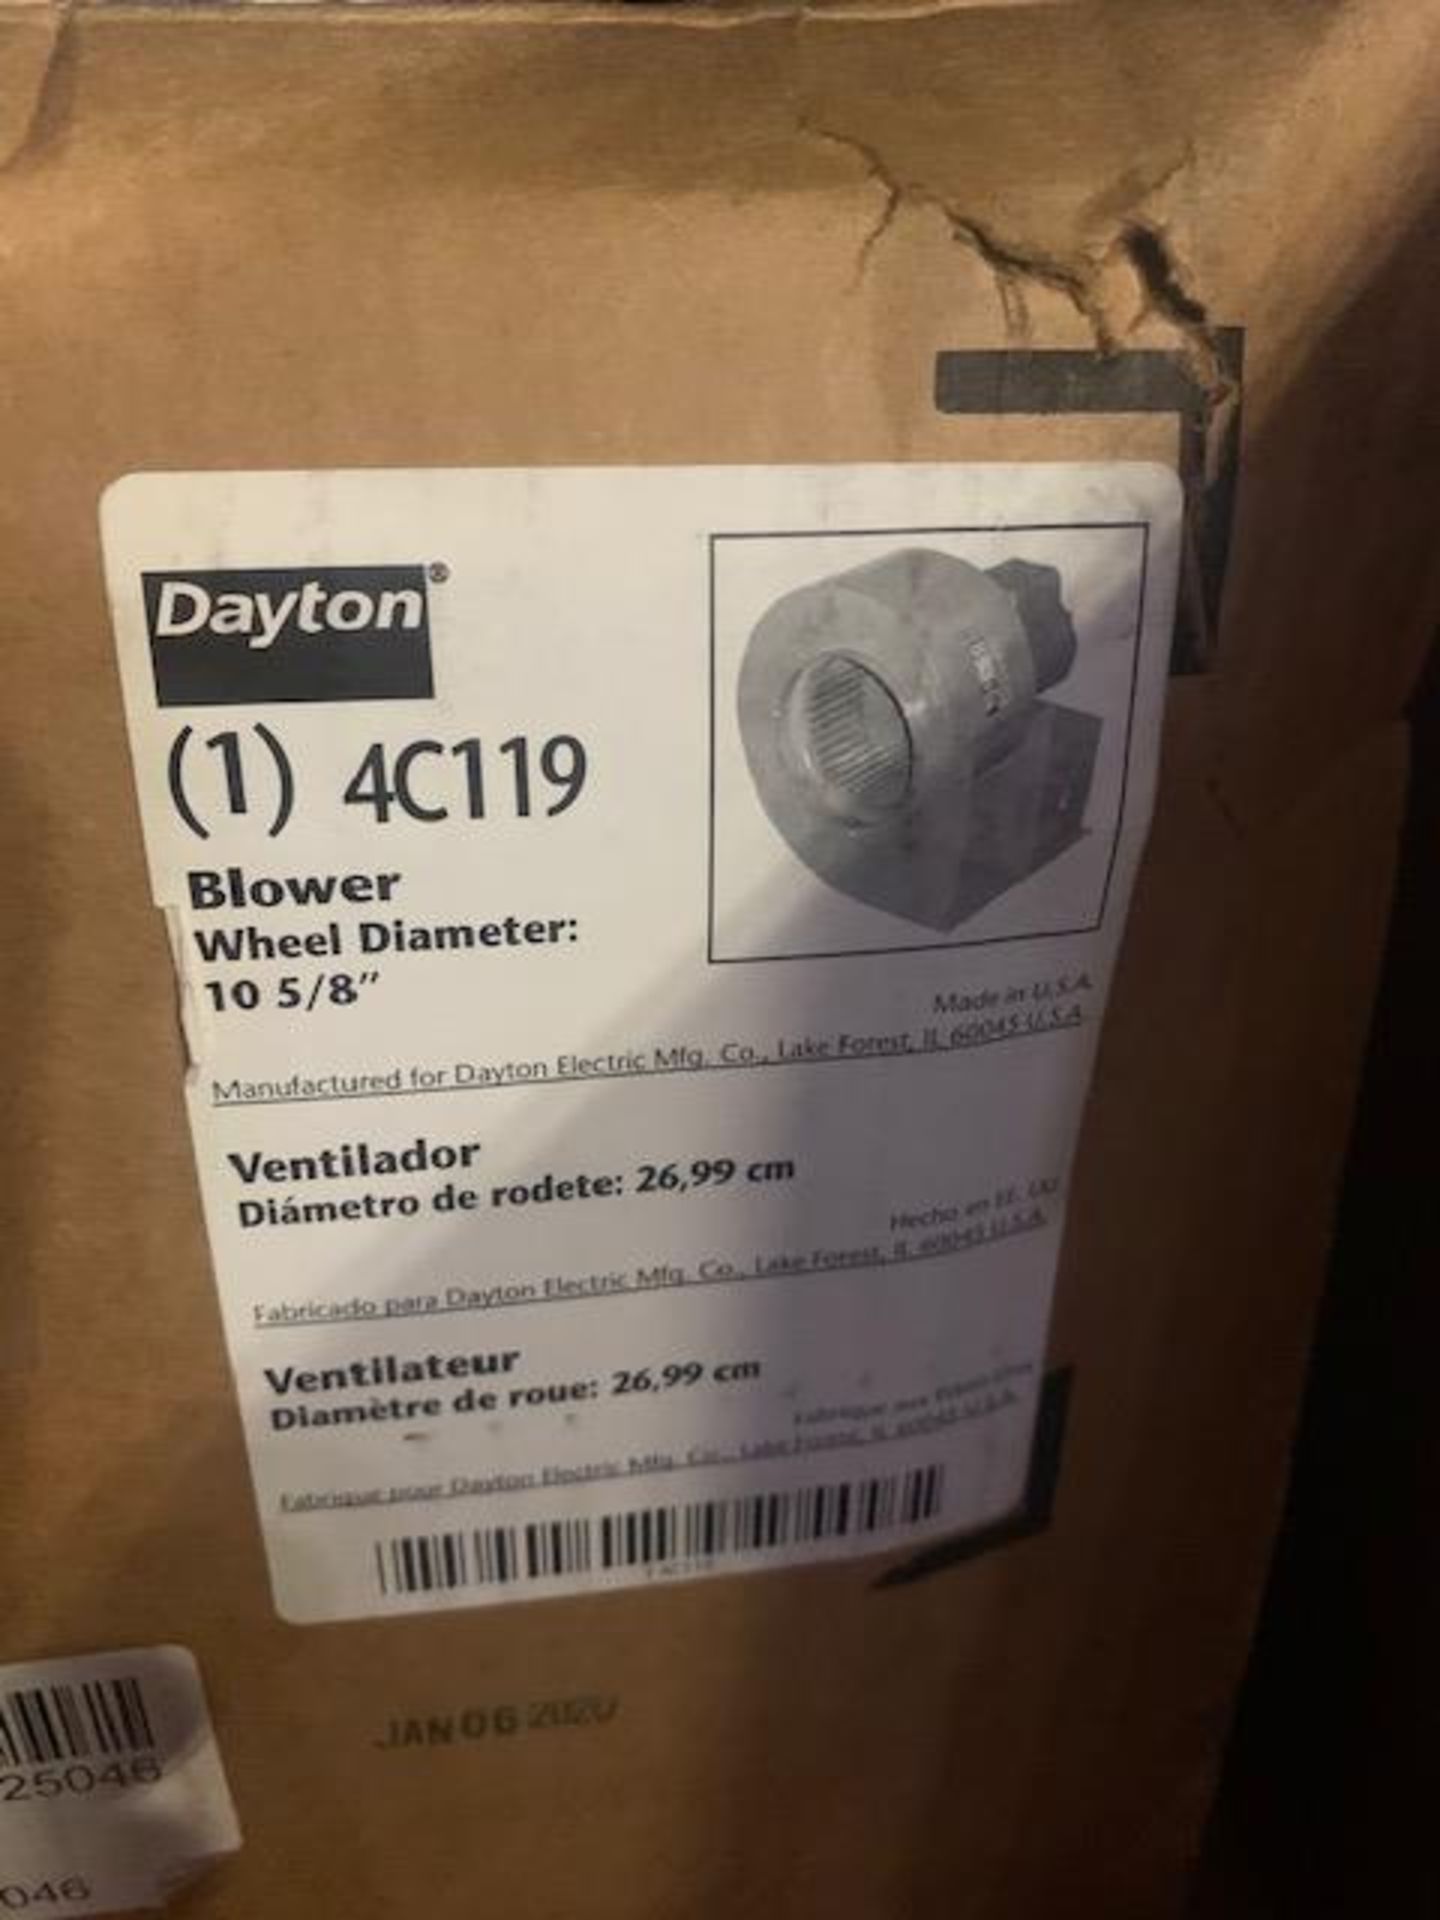 NEW IN BOX Dayton Mod# 4C119 Blower Unit - Image 2 of 3